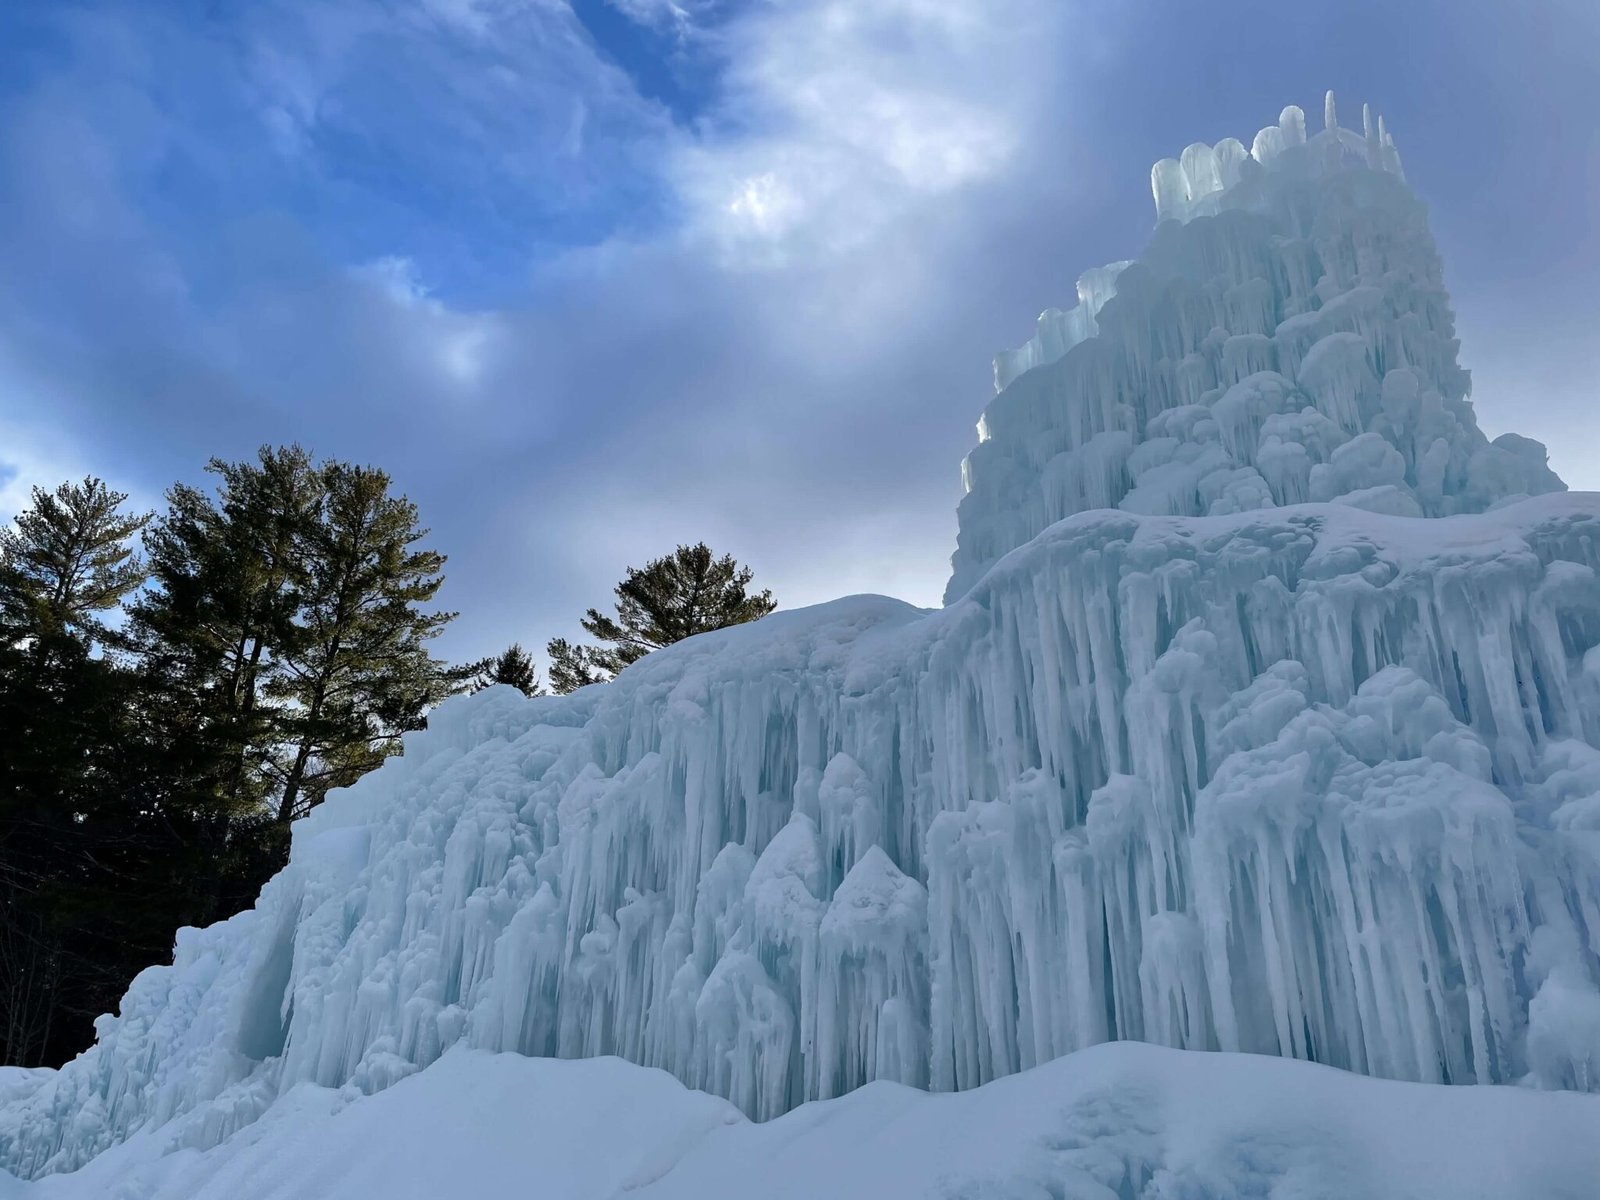 New Hampshire, winter bucket list destinations